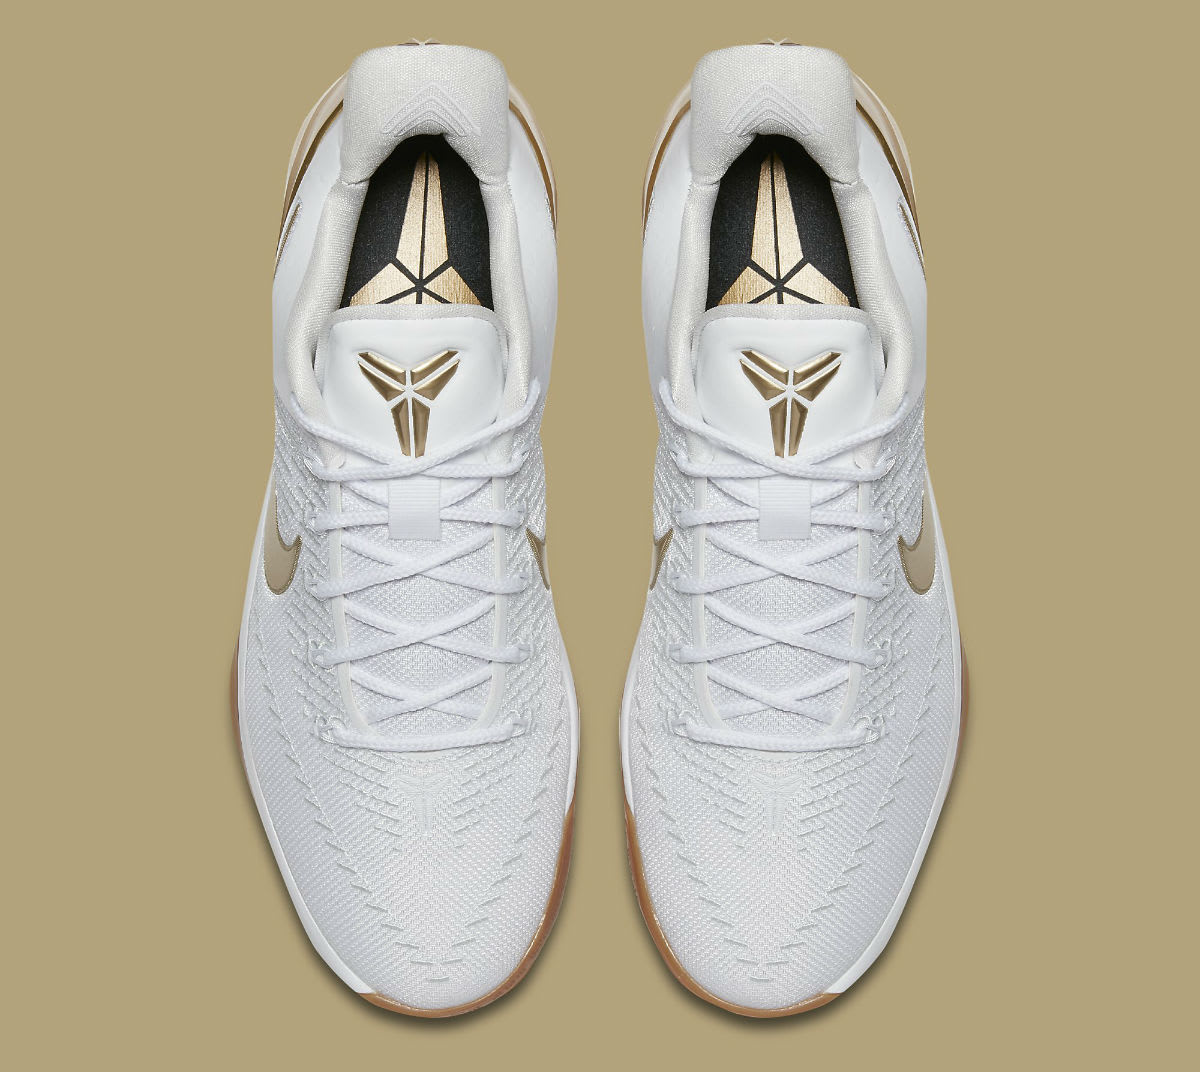 Nike LeBron Soldier 11 White Metallic Gold Black Release Date Top 852425-107